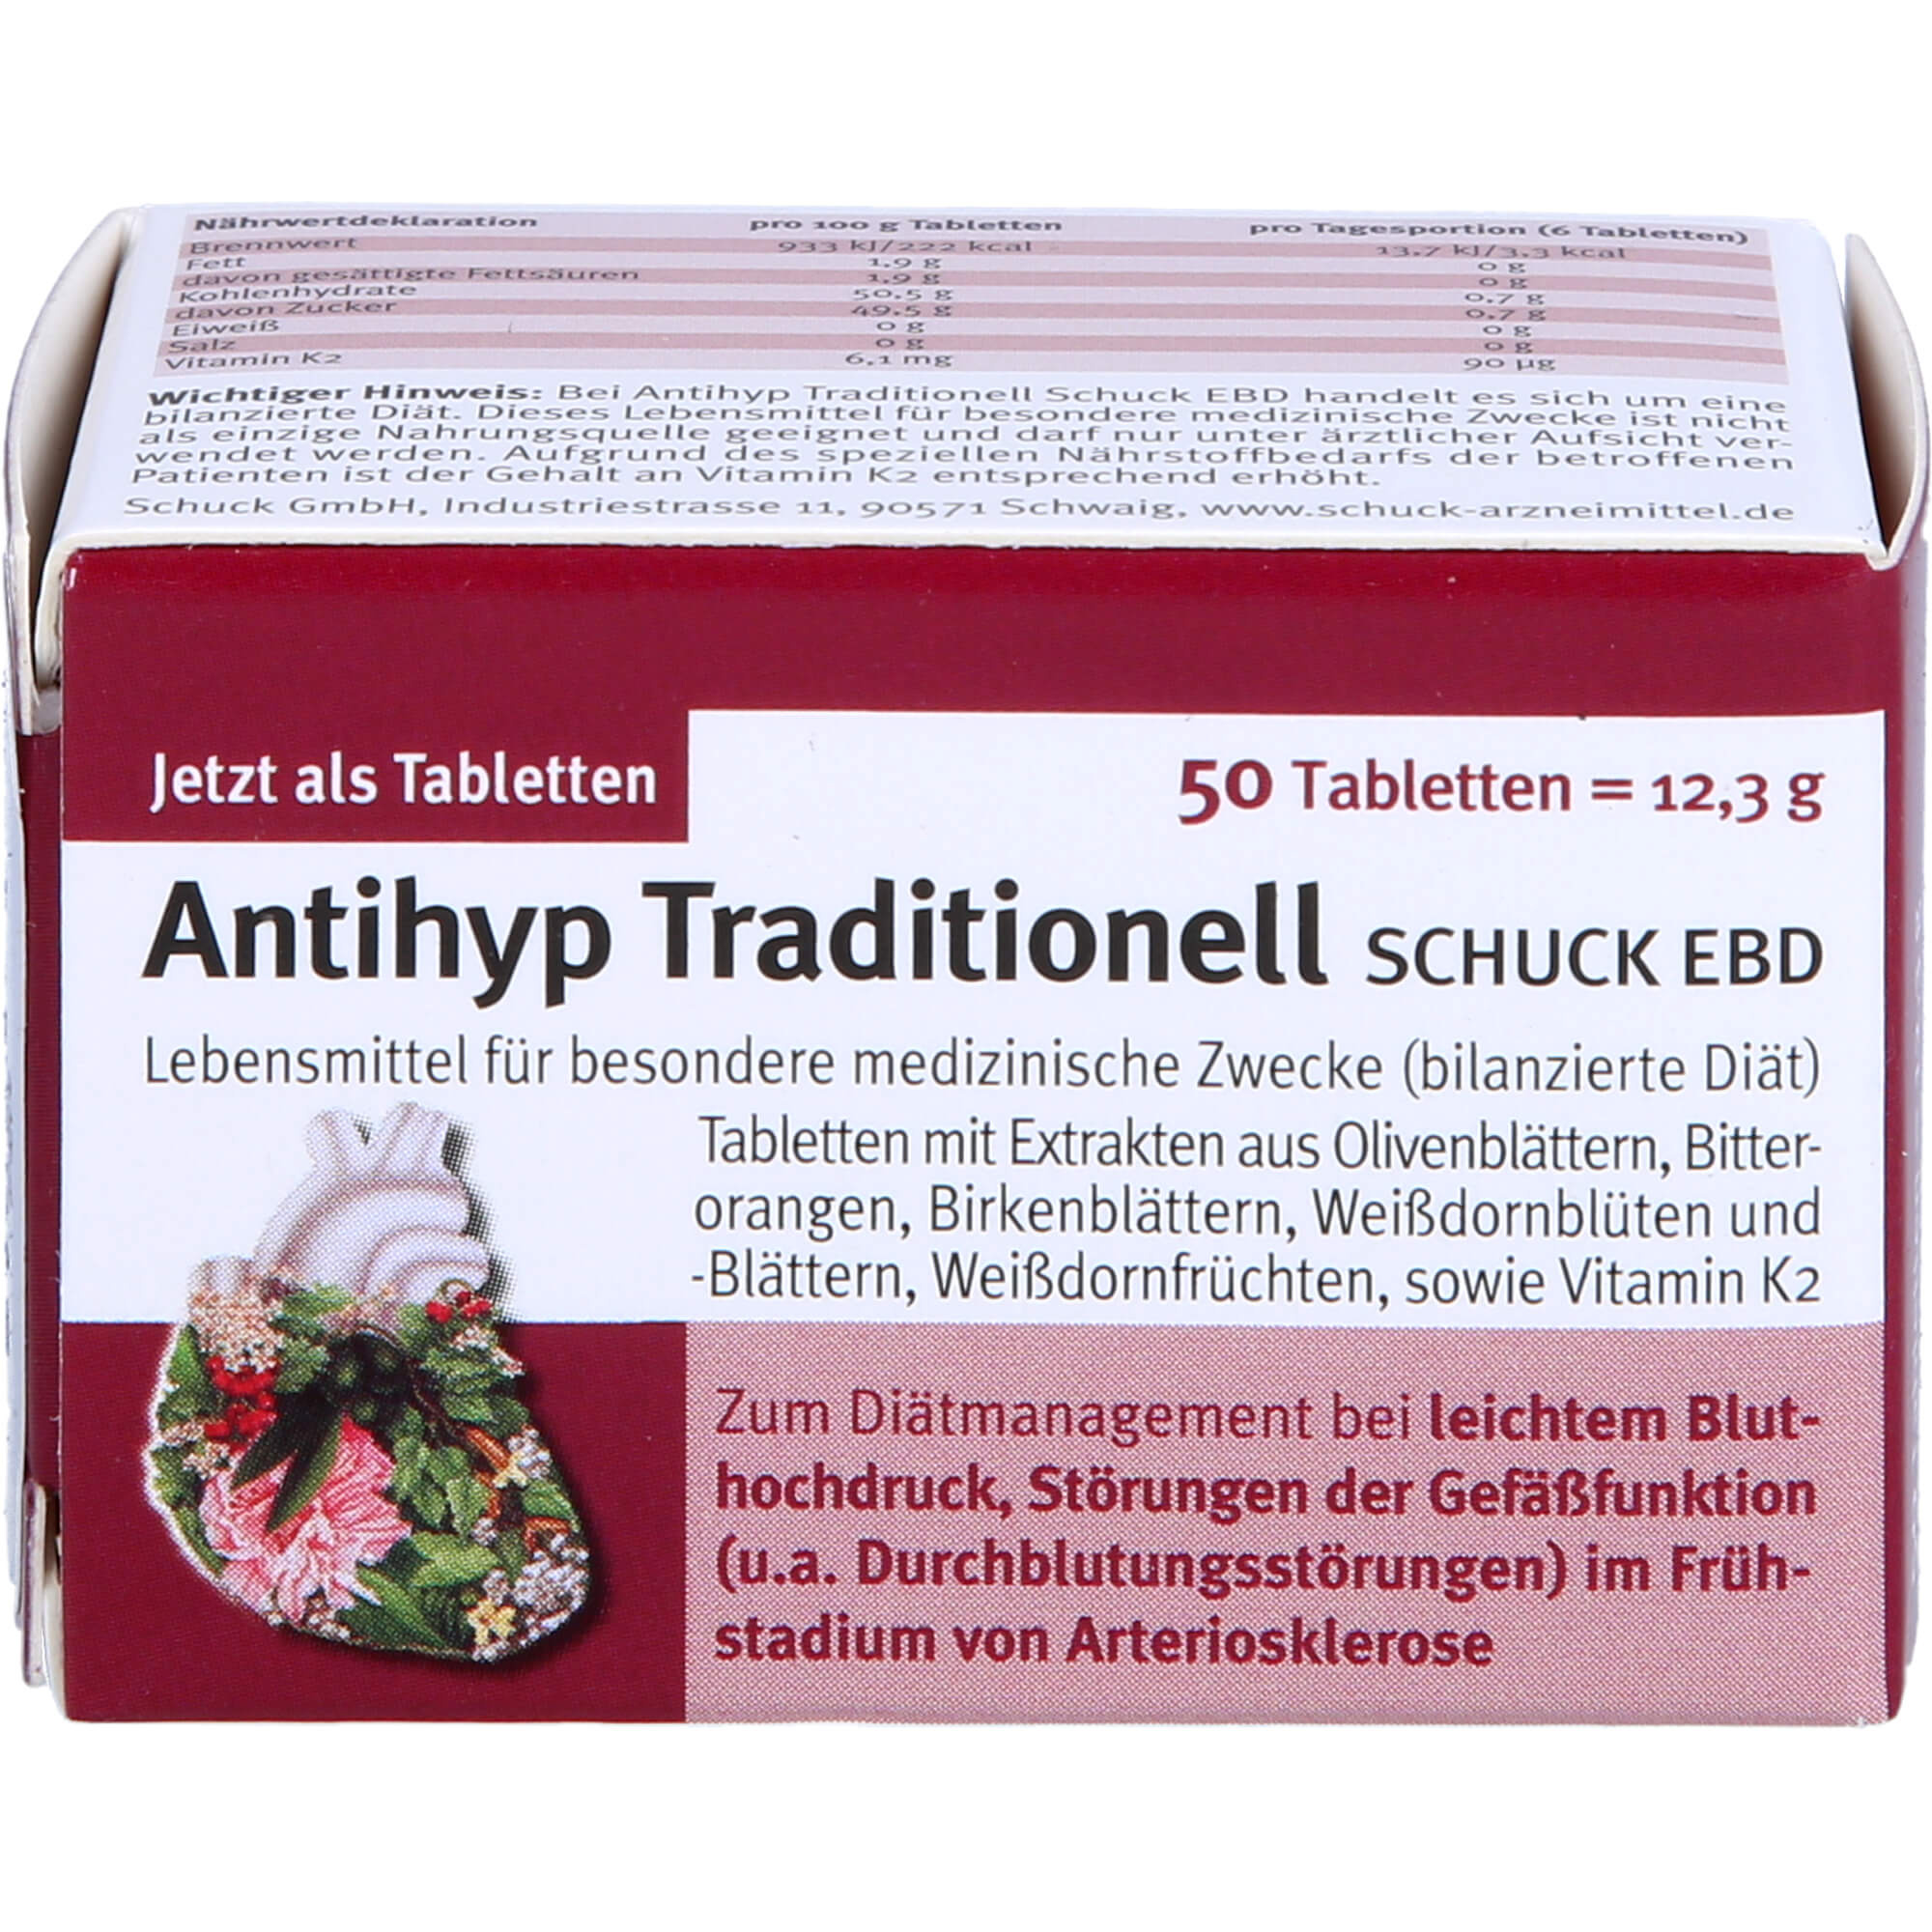 ANTIHYP Traditionell Schuck ebd Tabletten